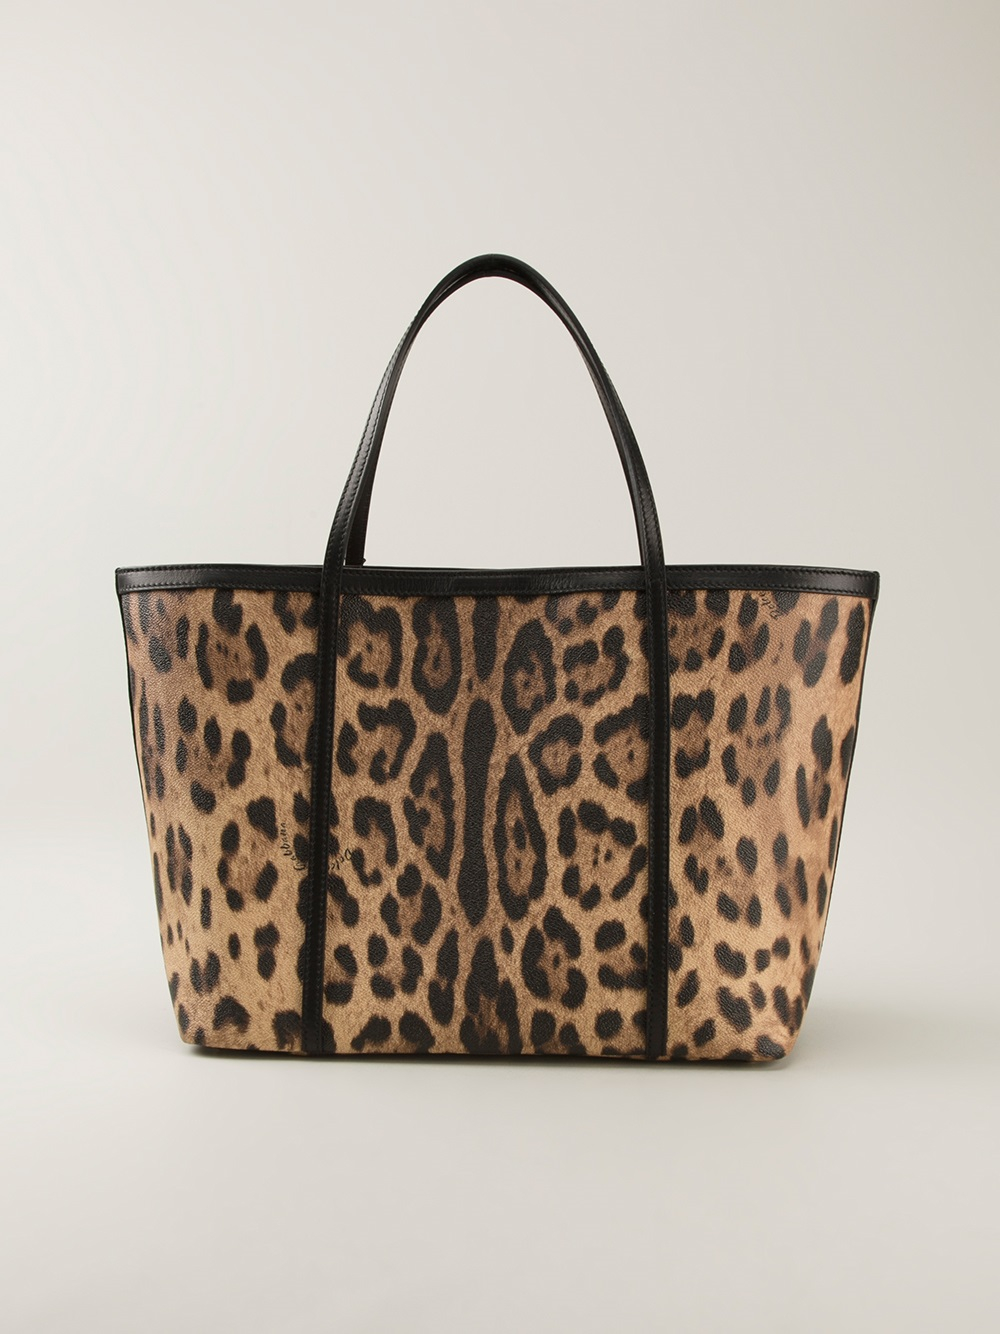 Lyst - Dolce & Gabbana Leopard Print Tote in Brown